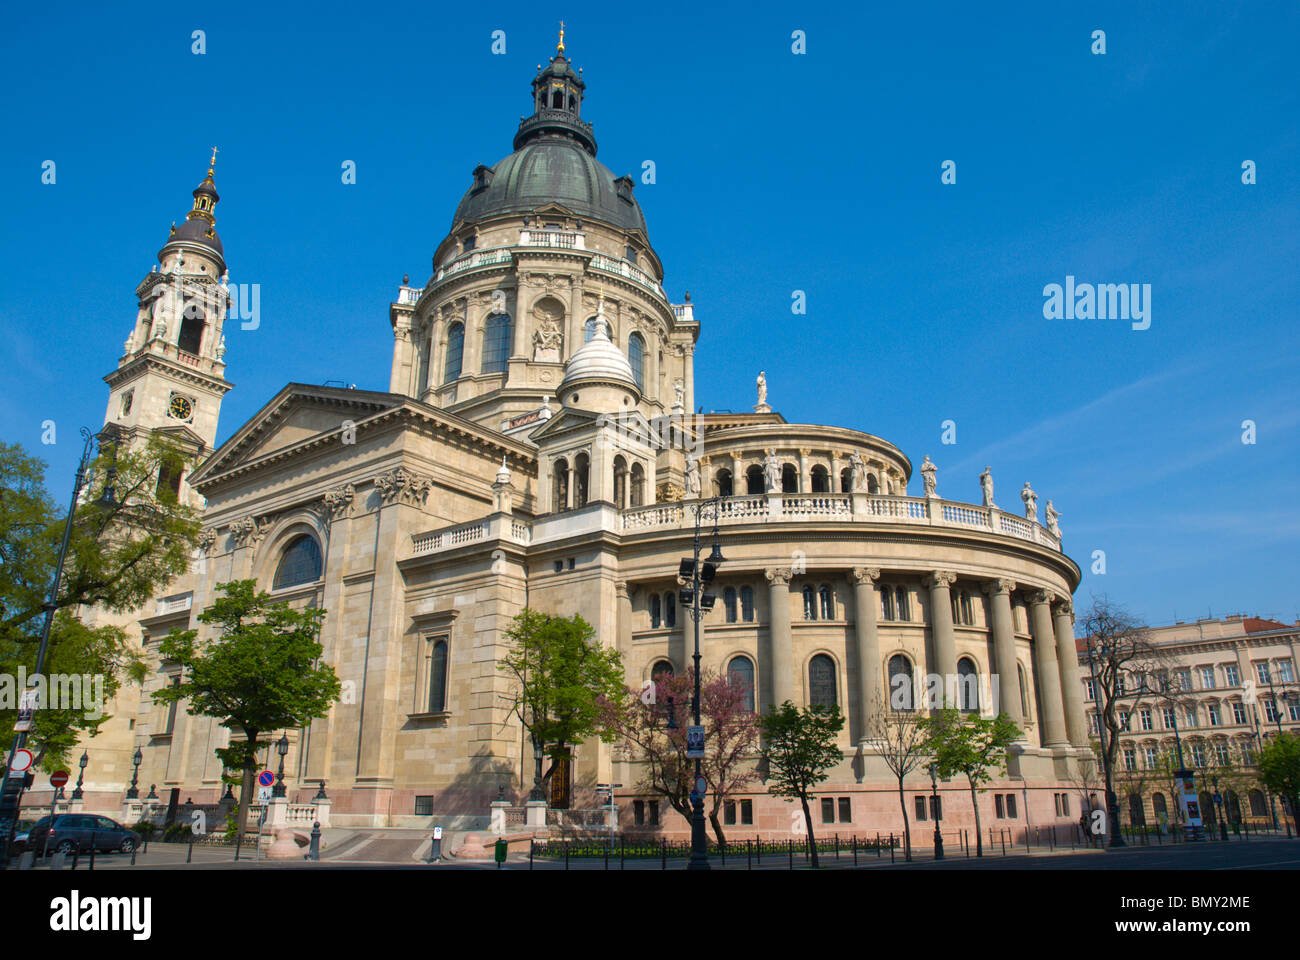 Szent Istvan Bazilika church central Budapest Hungary Europe Stock Photo